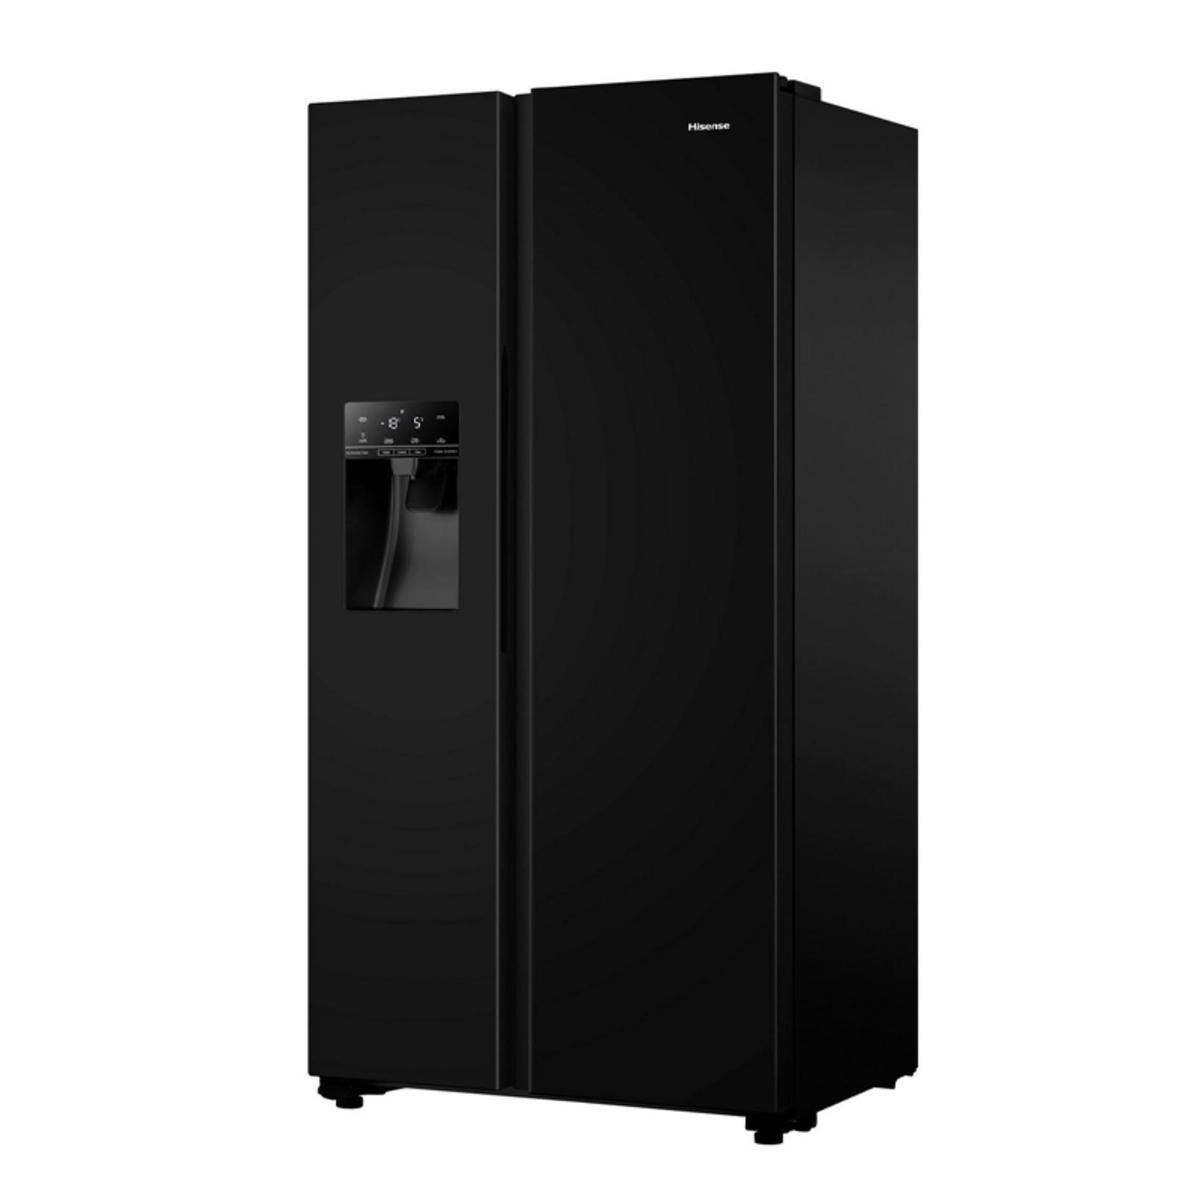 Hisense RS694N4TBF F Rated American Style Fridge Freezer, Black